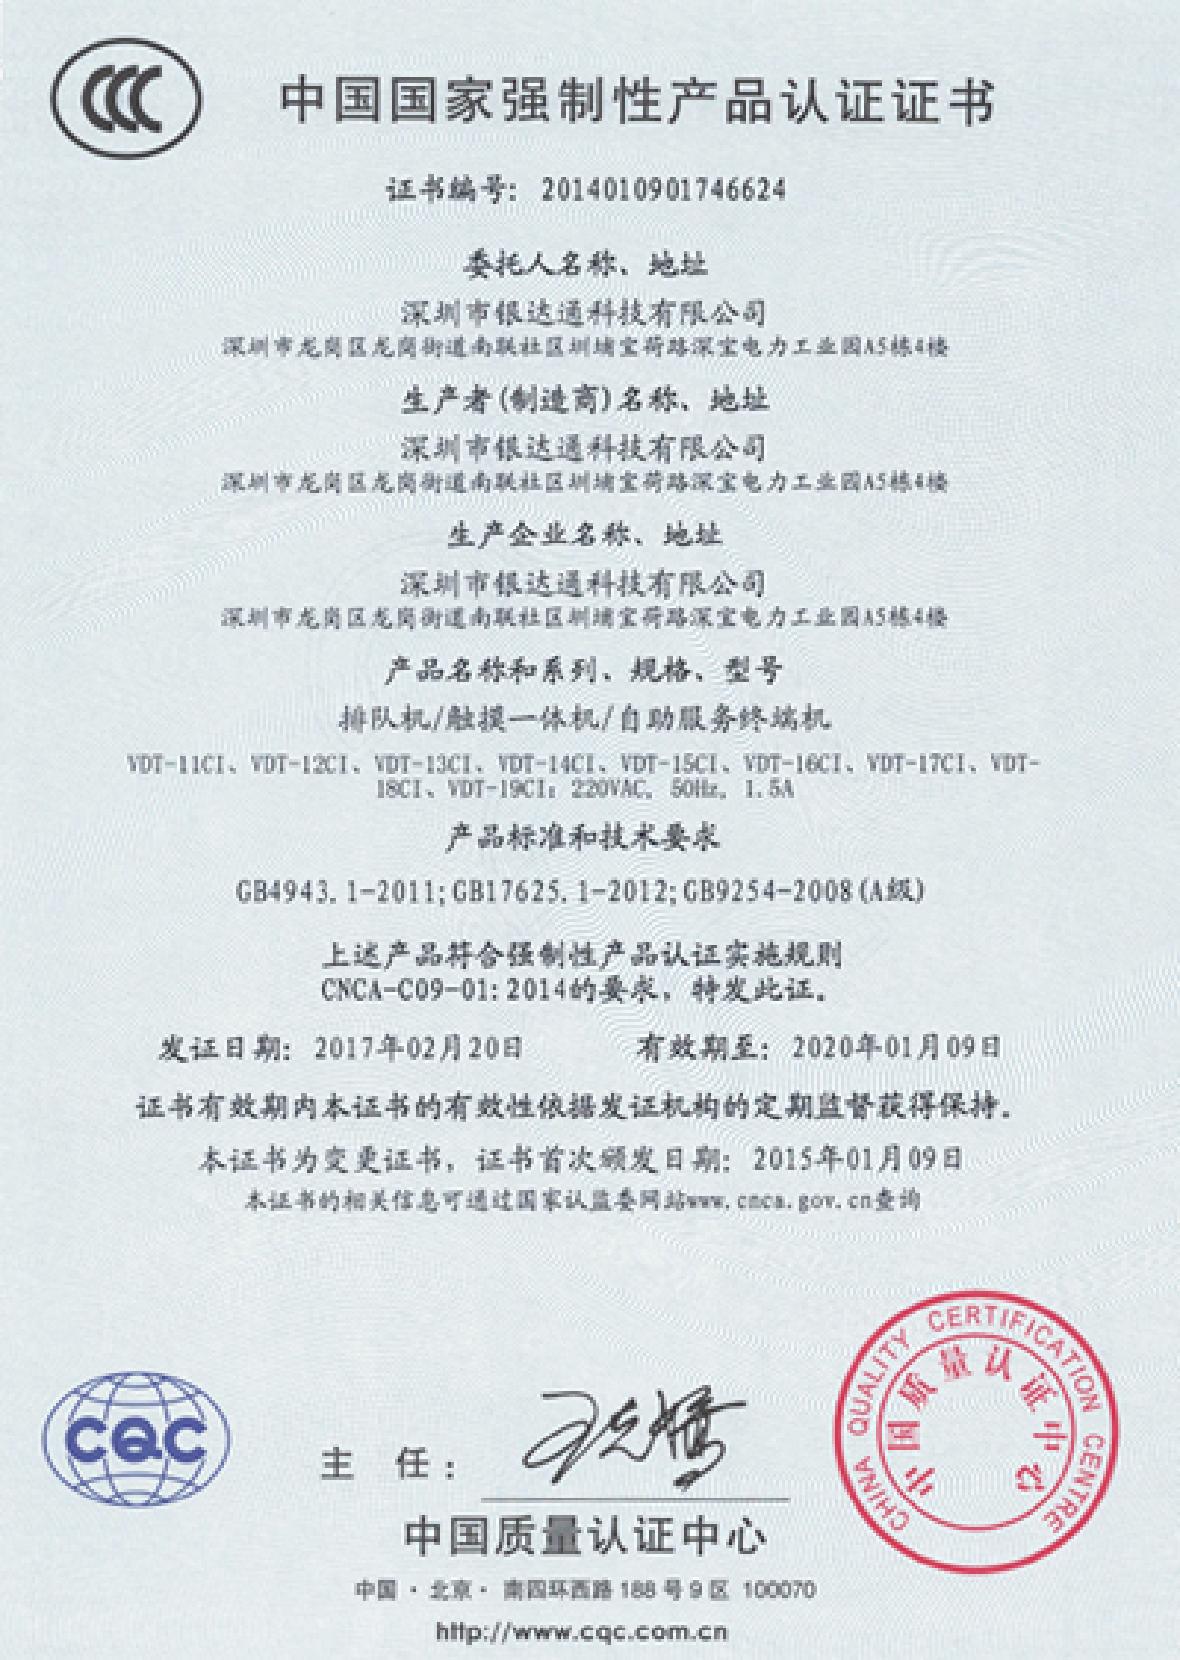 Yindatong queuing machine 3C certificate